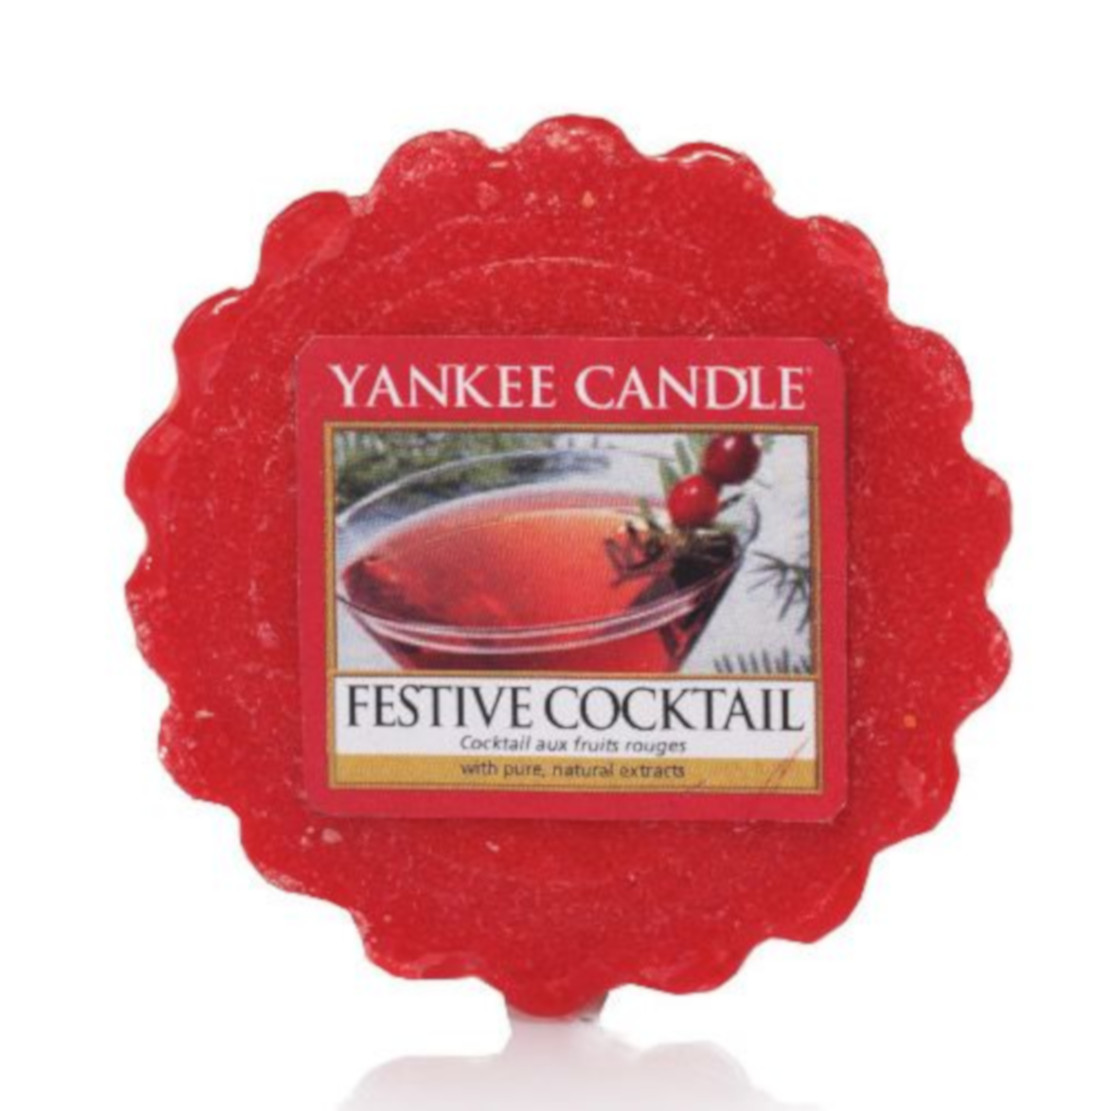 Yankee Candle Festive Cocktail Wax Melt Tart